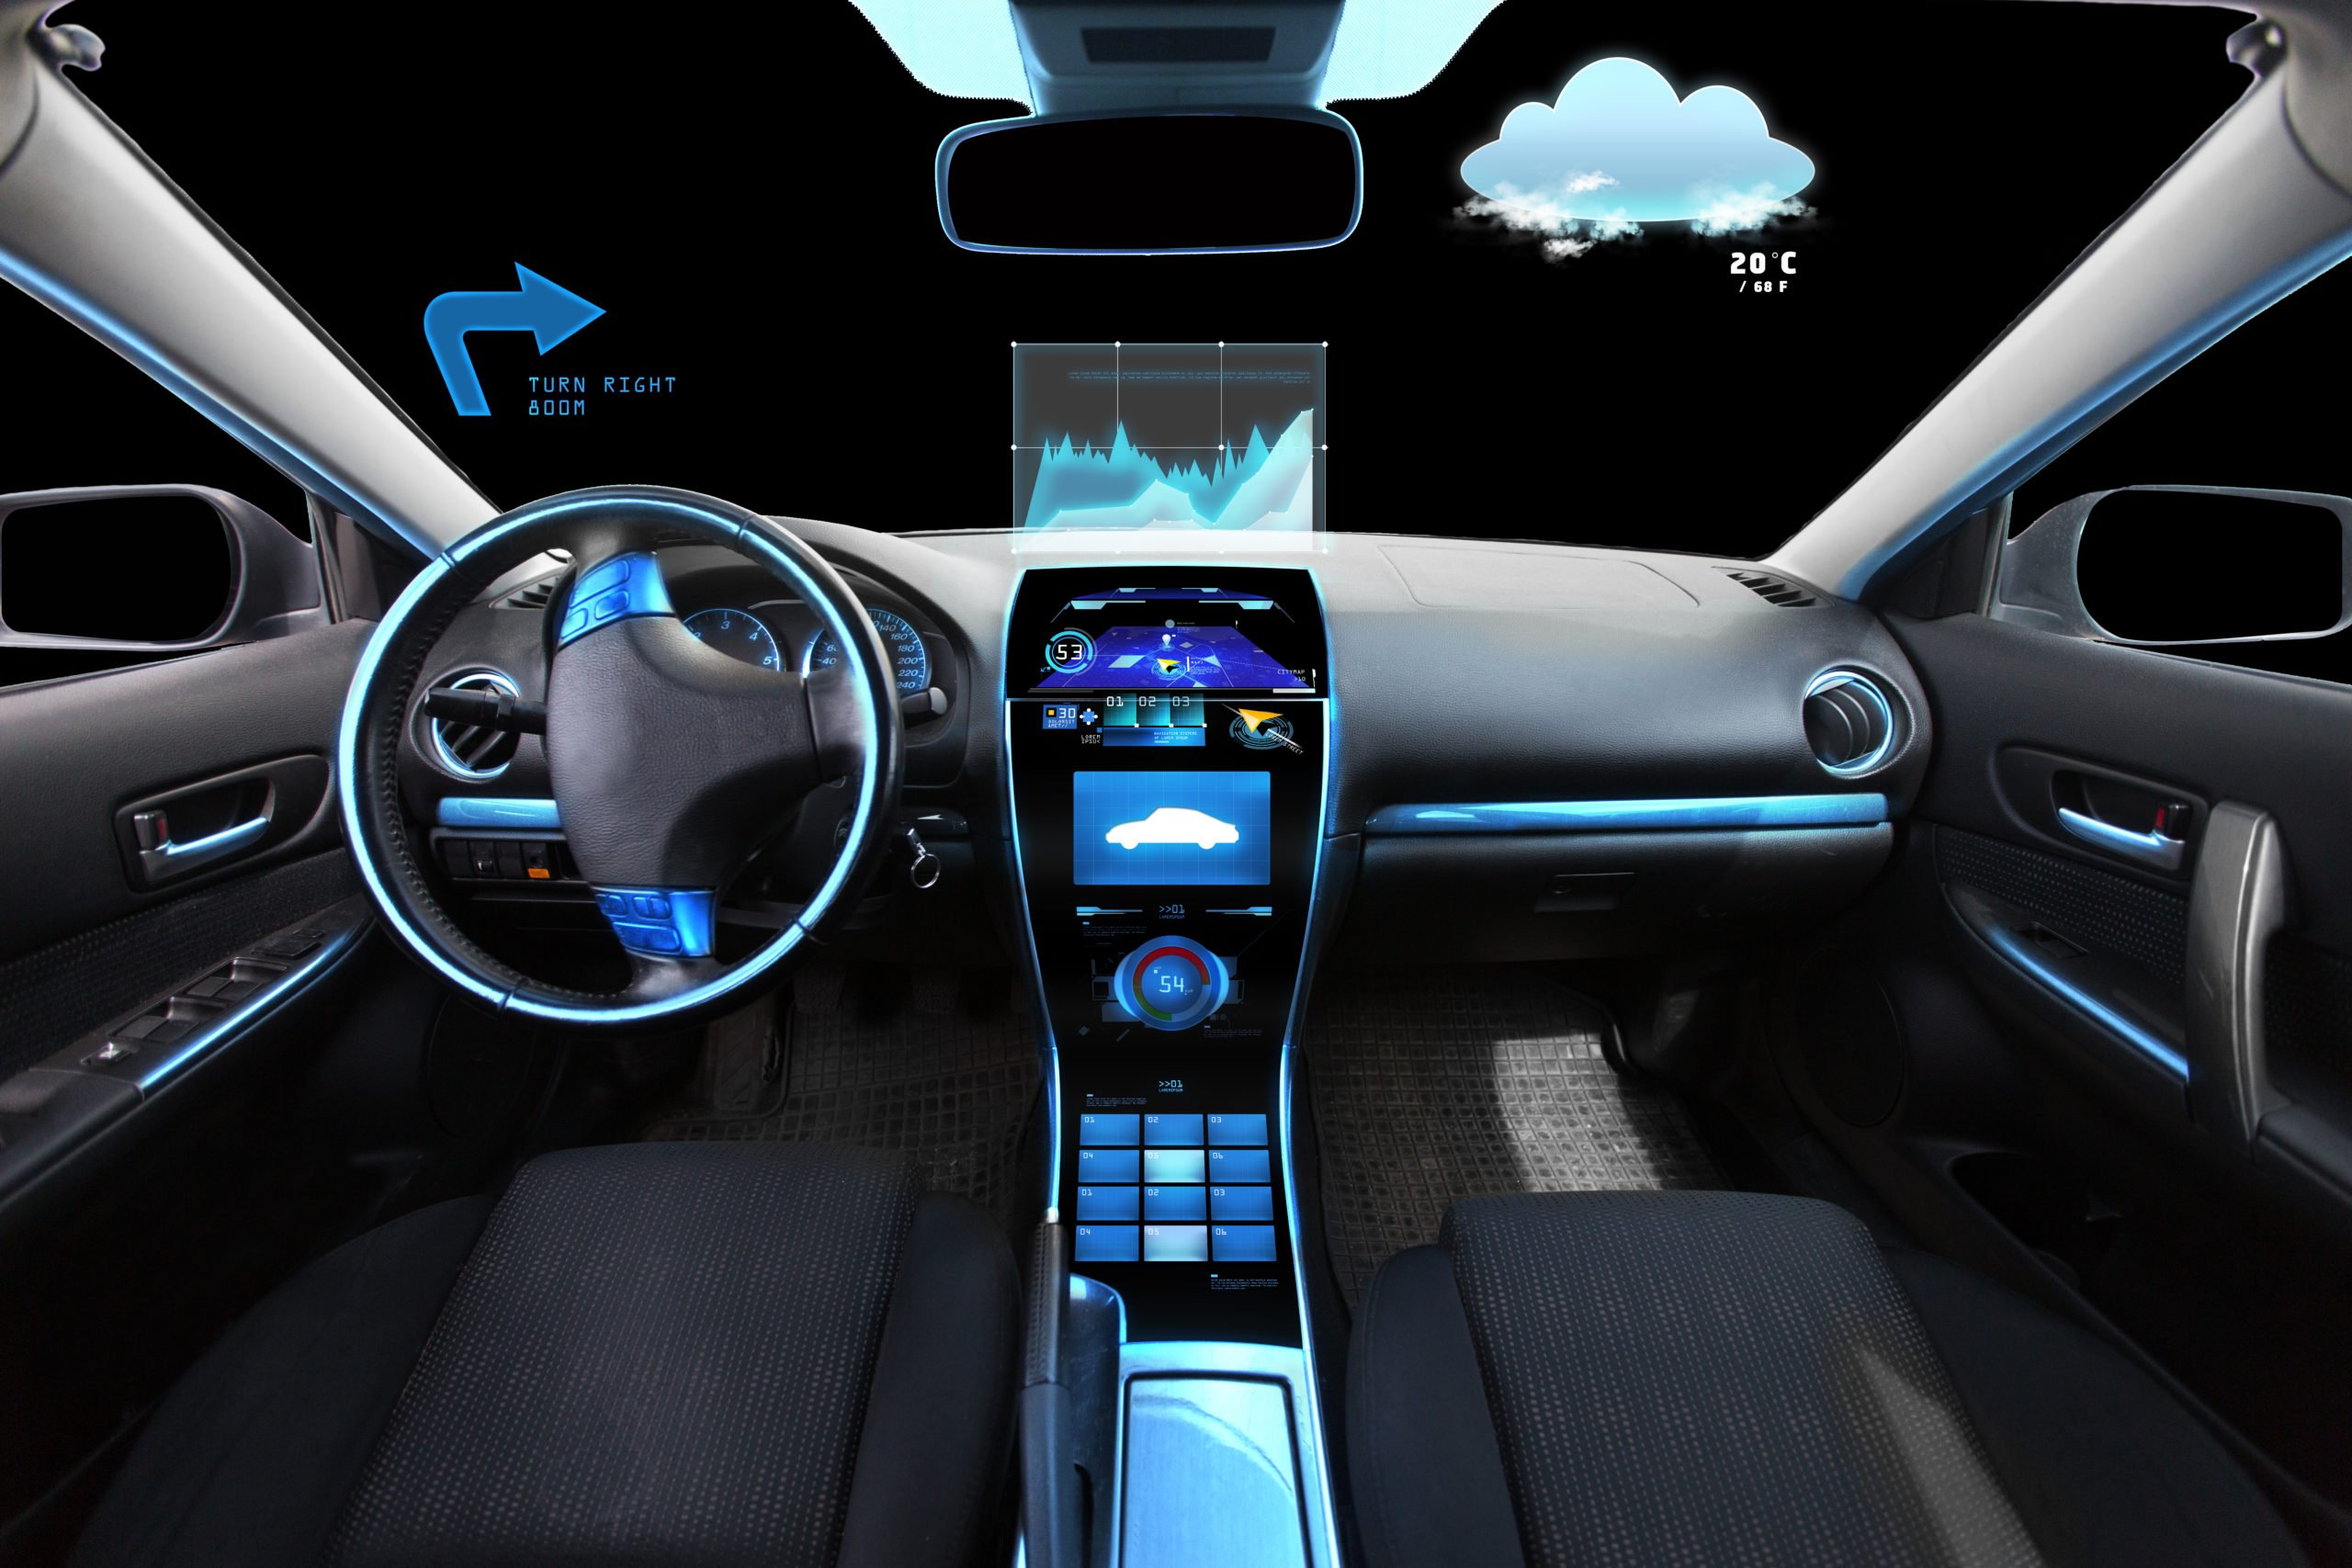 Transport,,Destination,And,Modern,Technology,Concept,-,Car,Salon,With